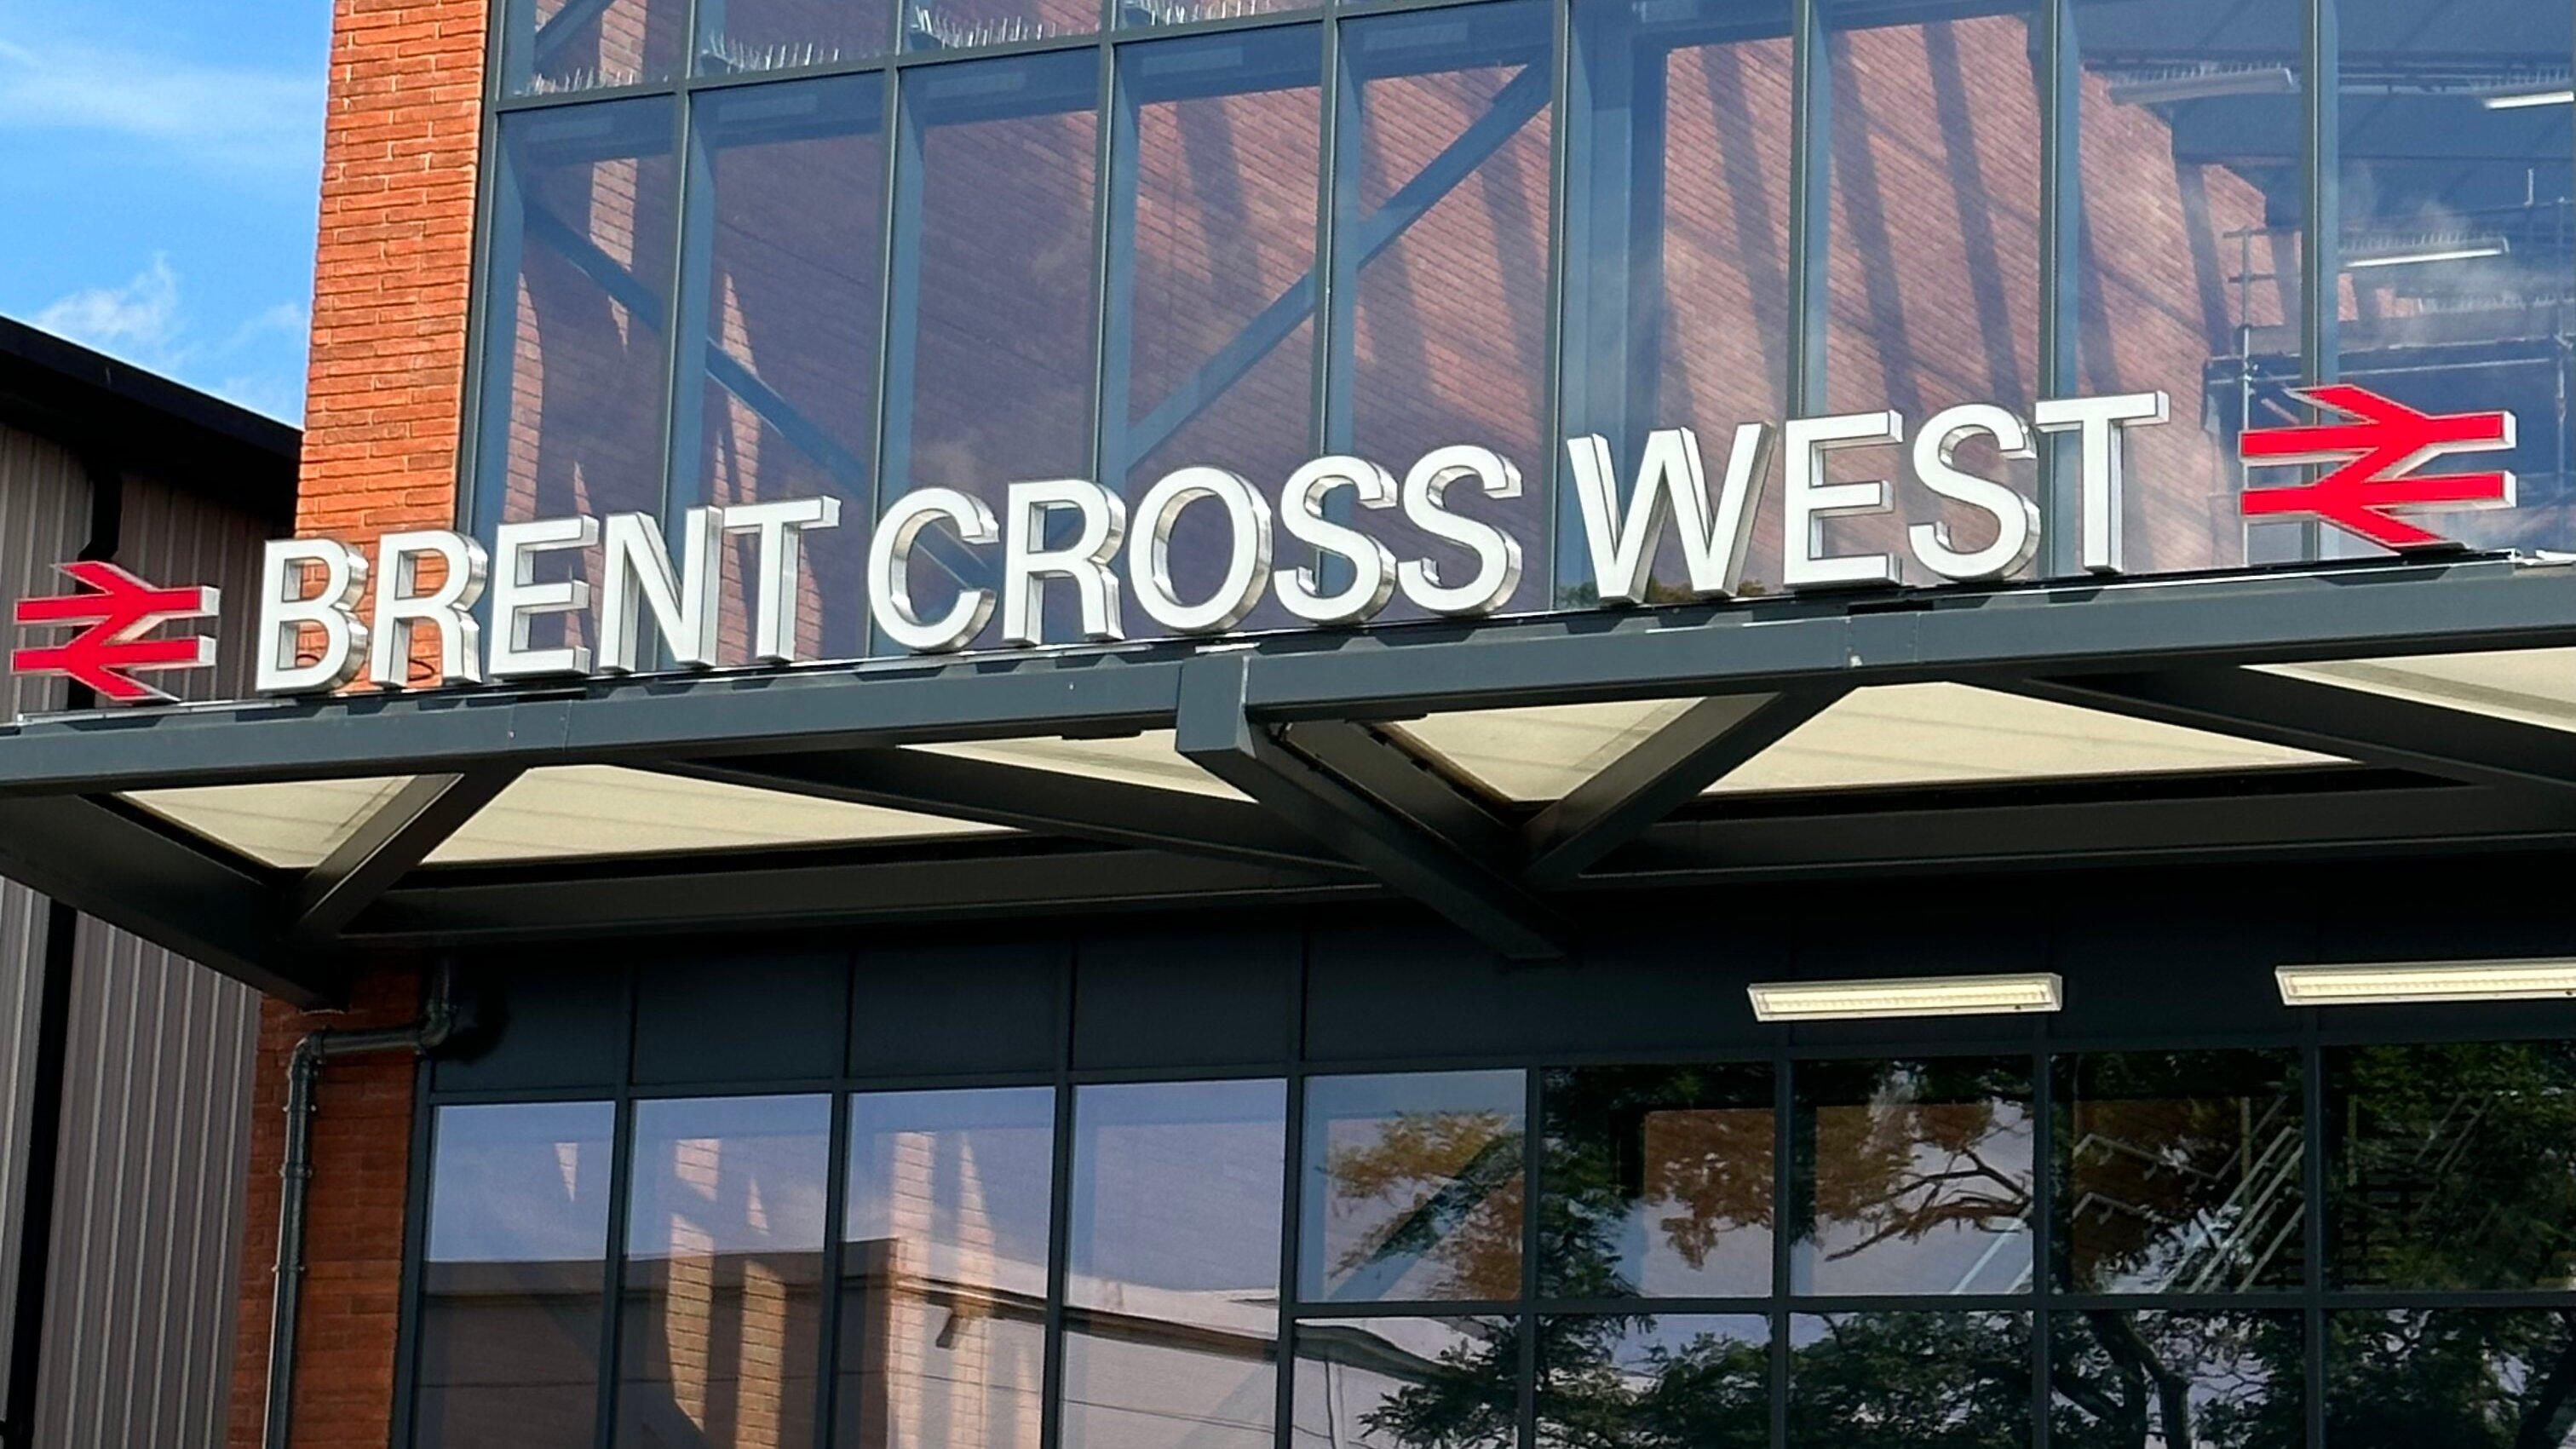 Western entrance signage of Brent Cross West